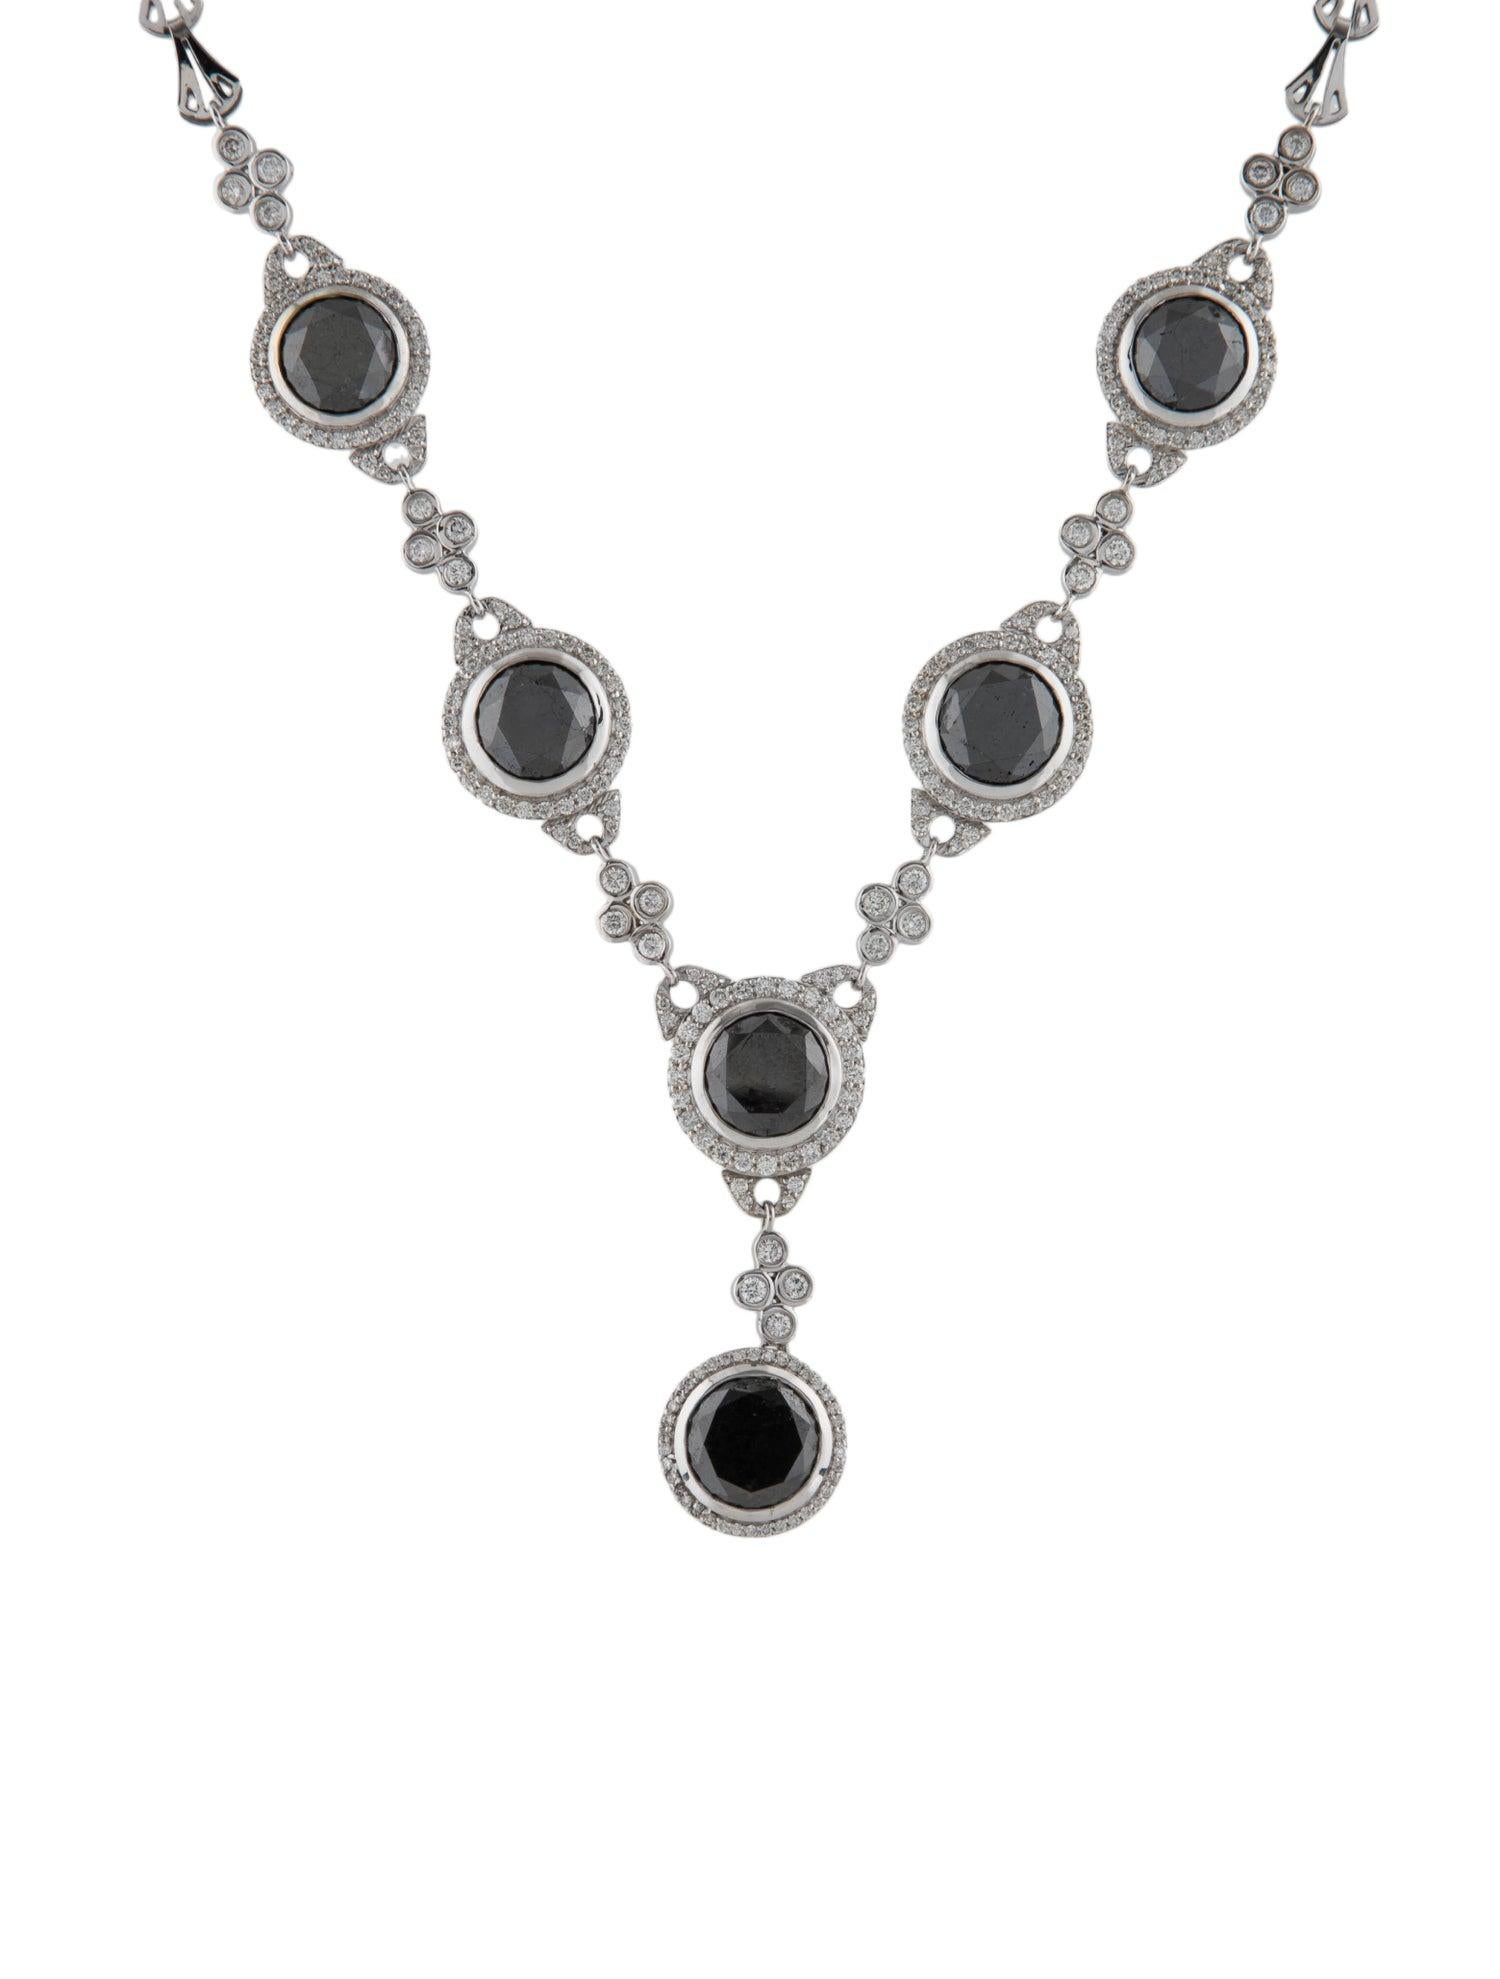 Brilliant Cut Luxurious 14K 32.23ctw Diamond Pendant Necklace - Exquisite Statement Jewelry For Sale